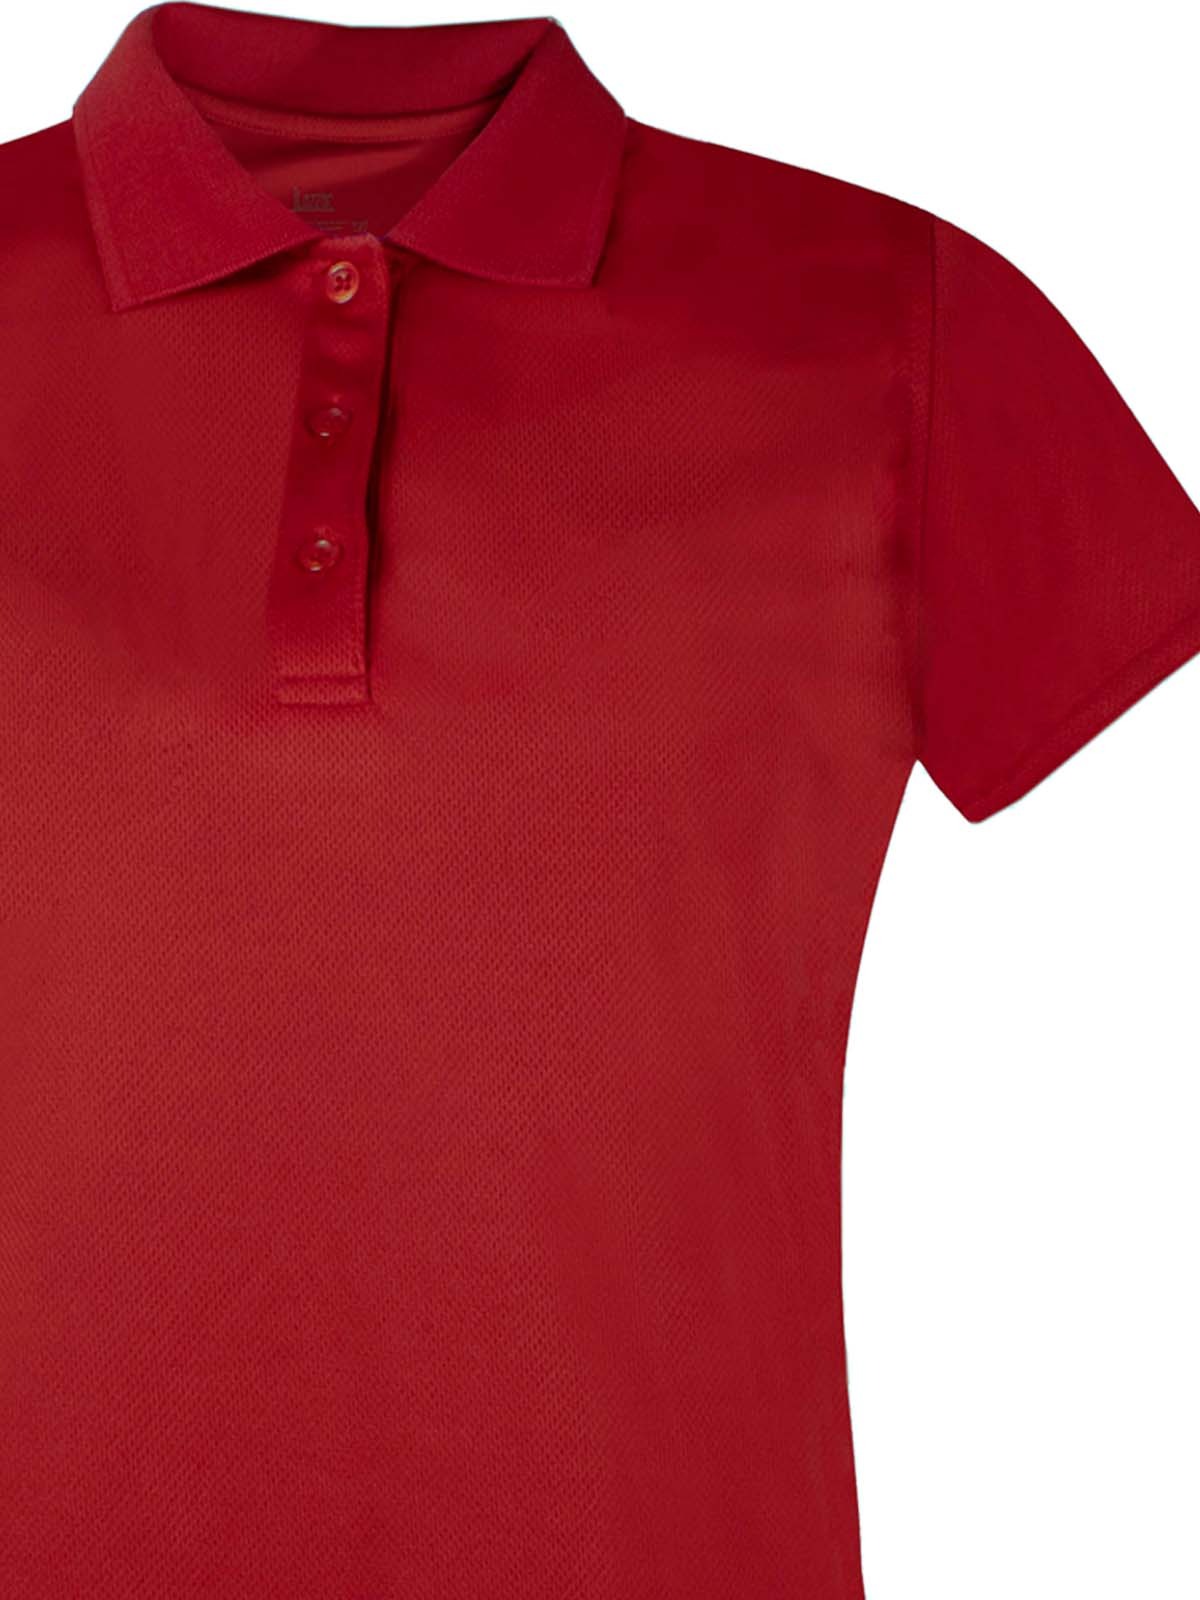 USA Polo Shirt Red Women